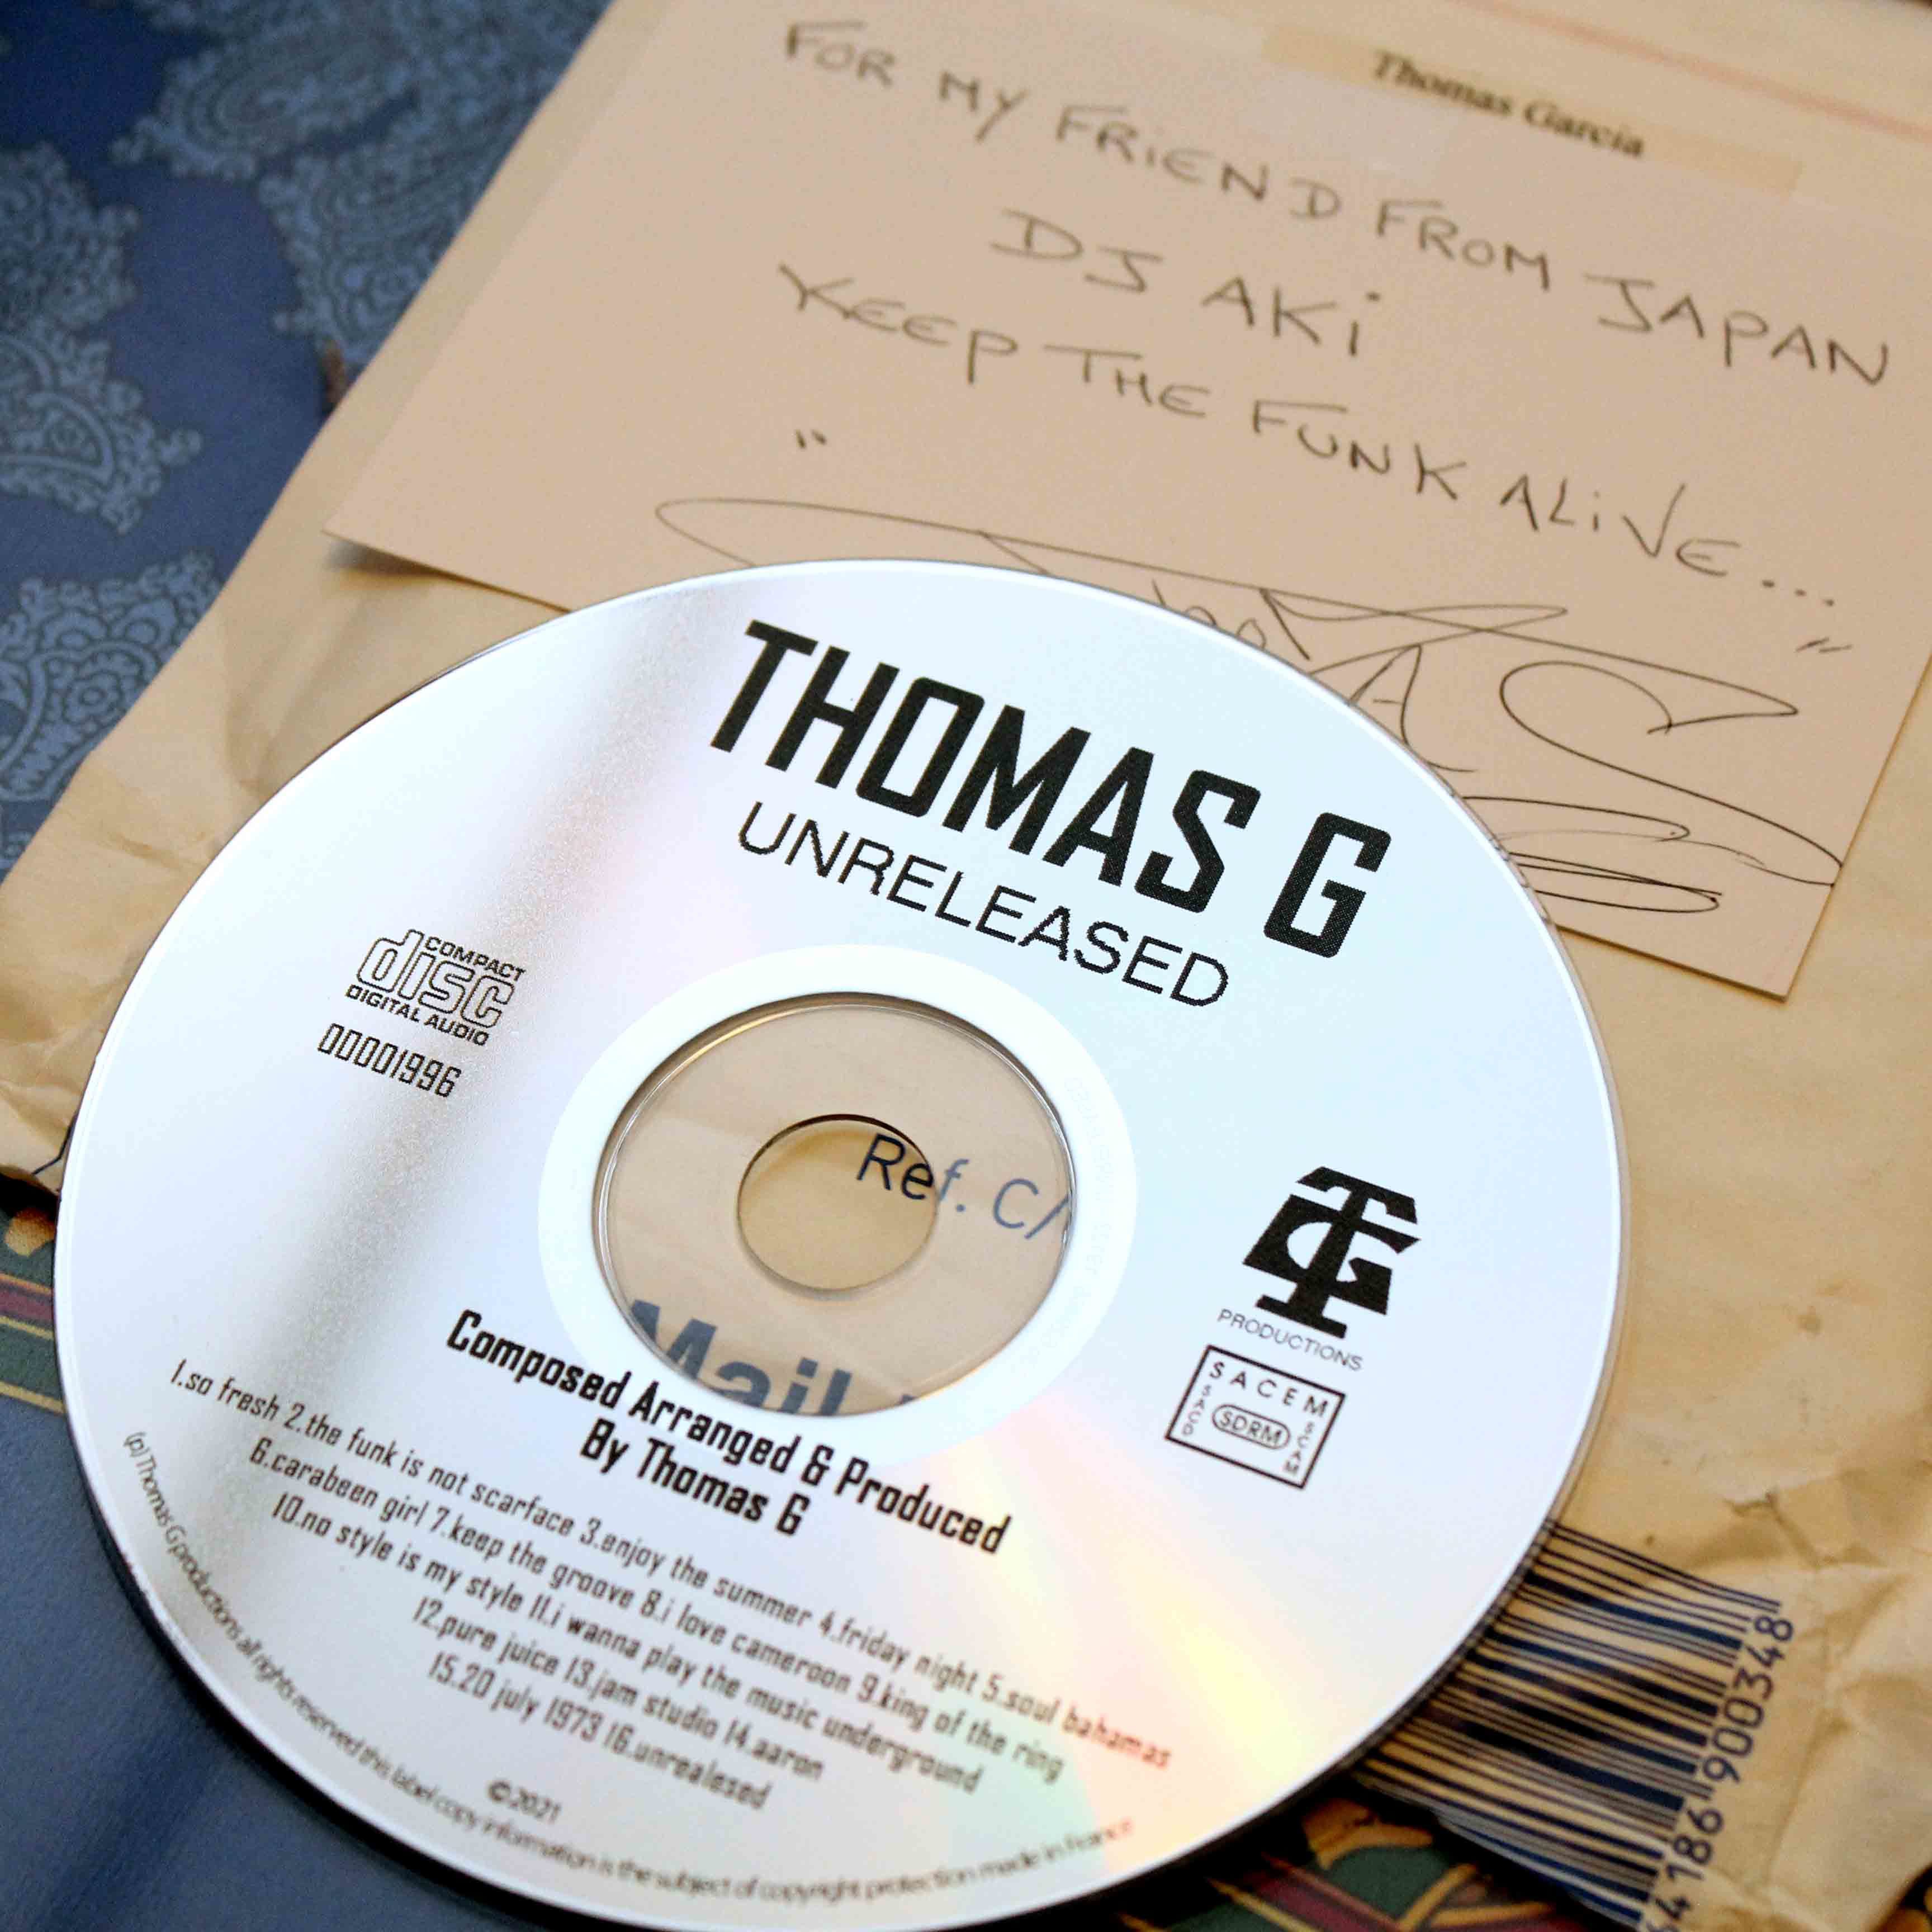 Thomas G ‎– Unreleased 03